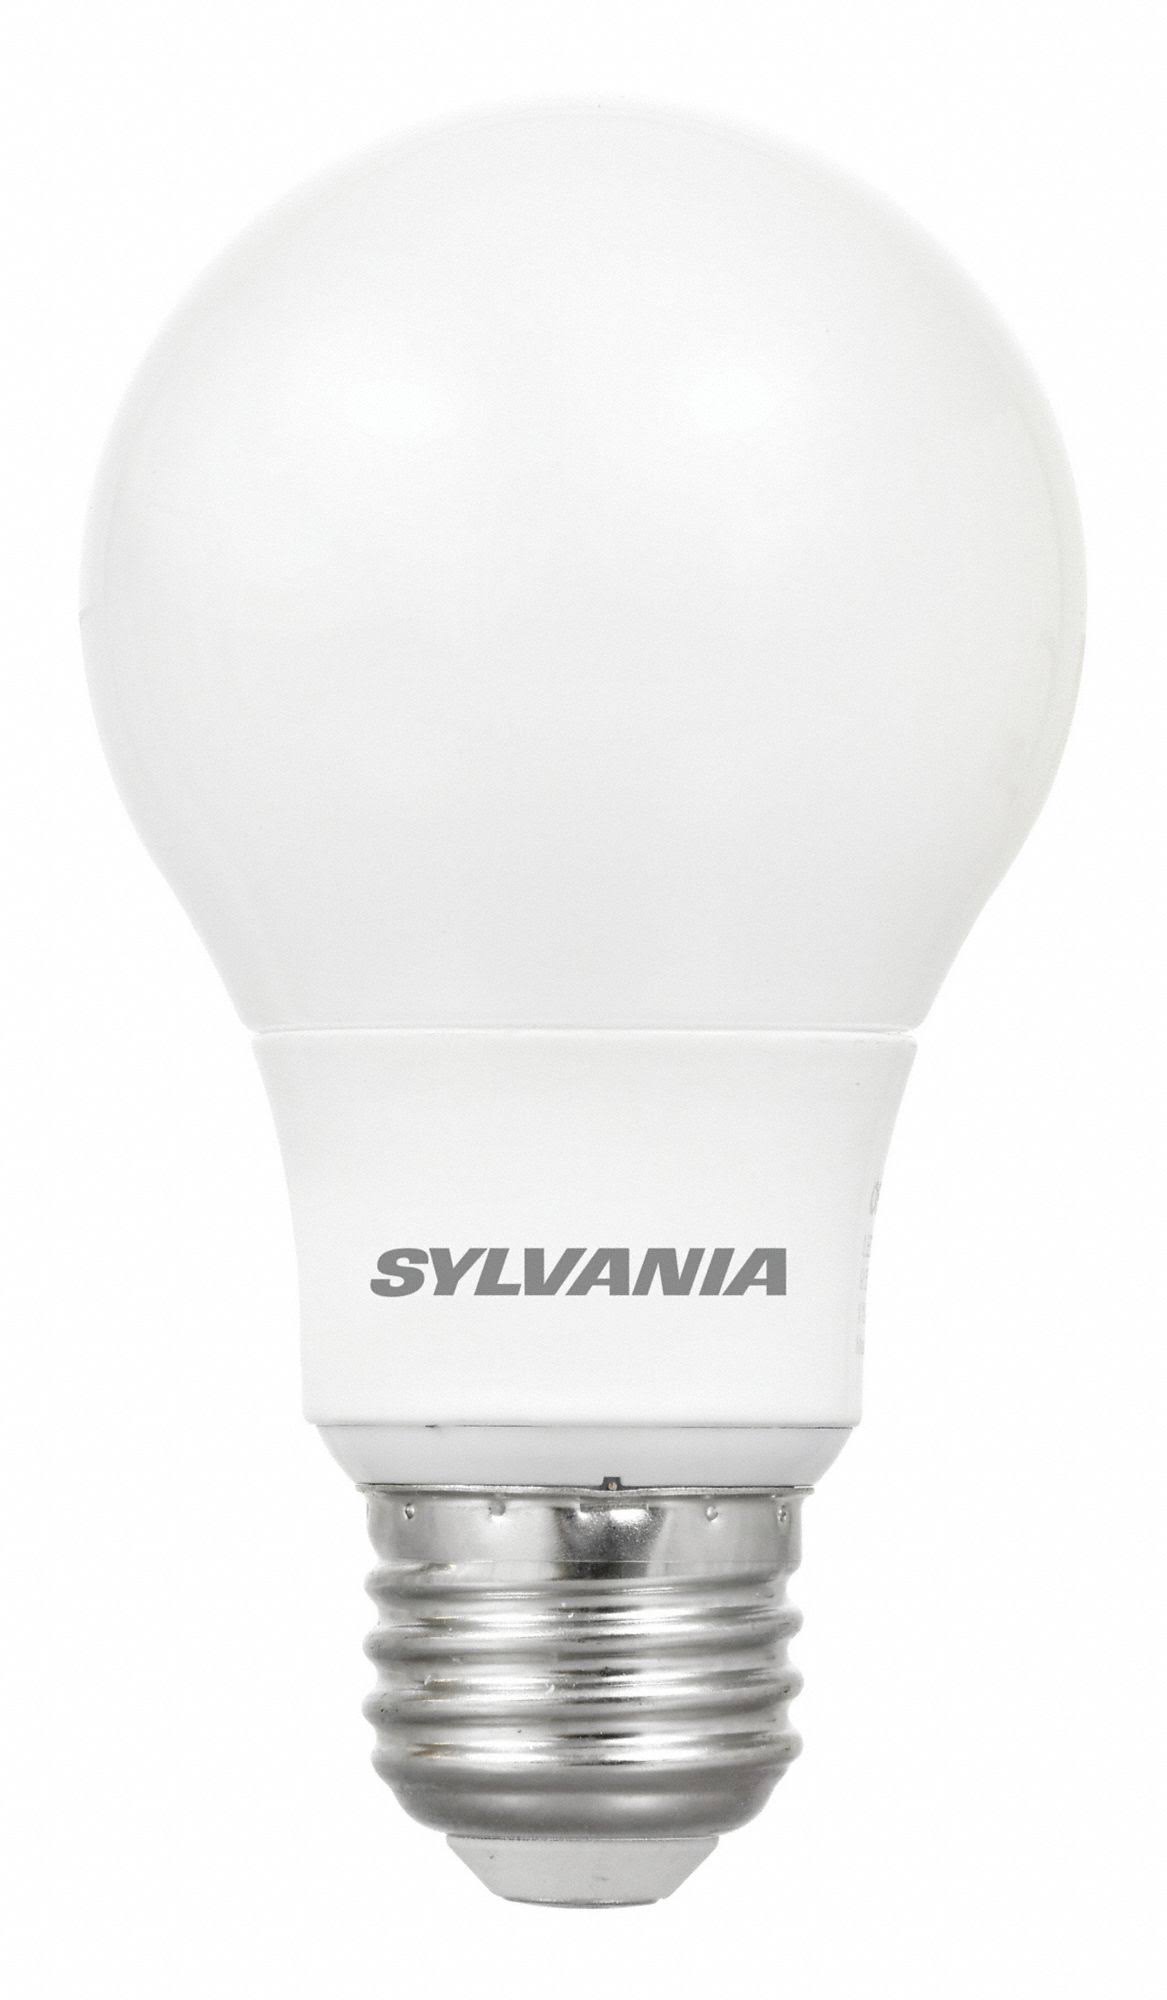 Sylvania 40671 LED Bulb, 8 W, Medium E26, A19 Lamp, Soft White Light 6 Pack